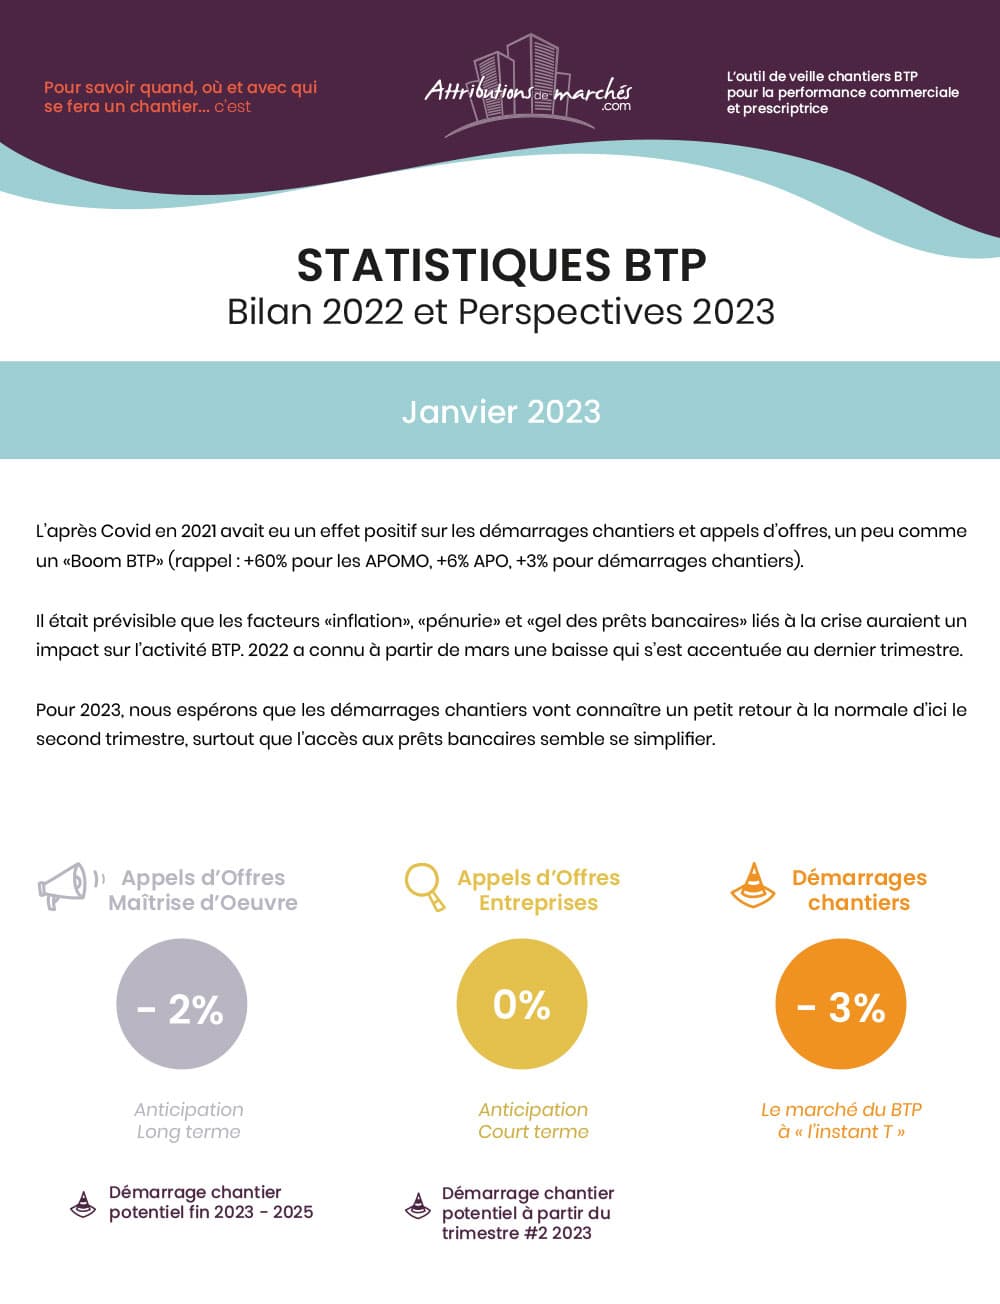 visuel newsletter statistiques btp janvier 2023 bilan 2022